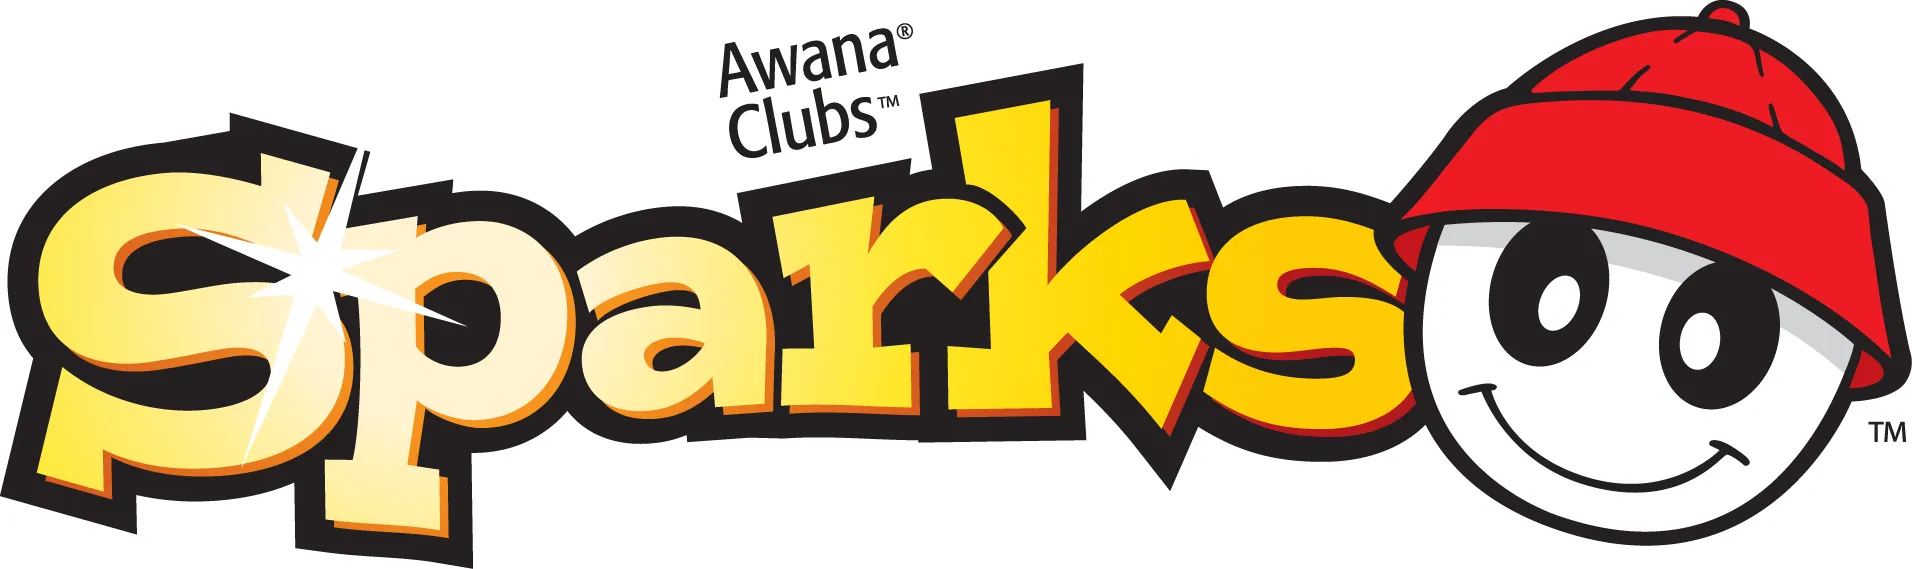 Awana Sparks Club logo